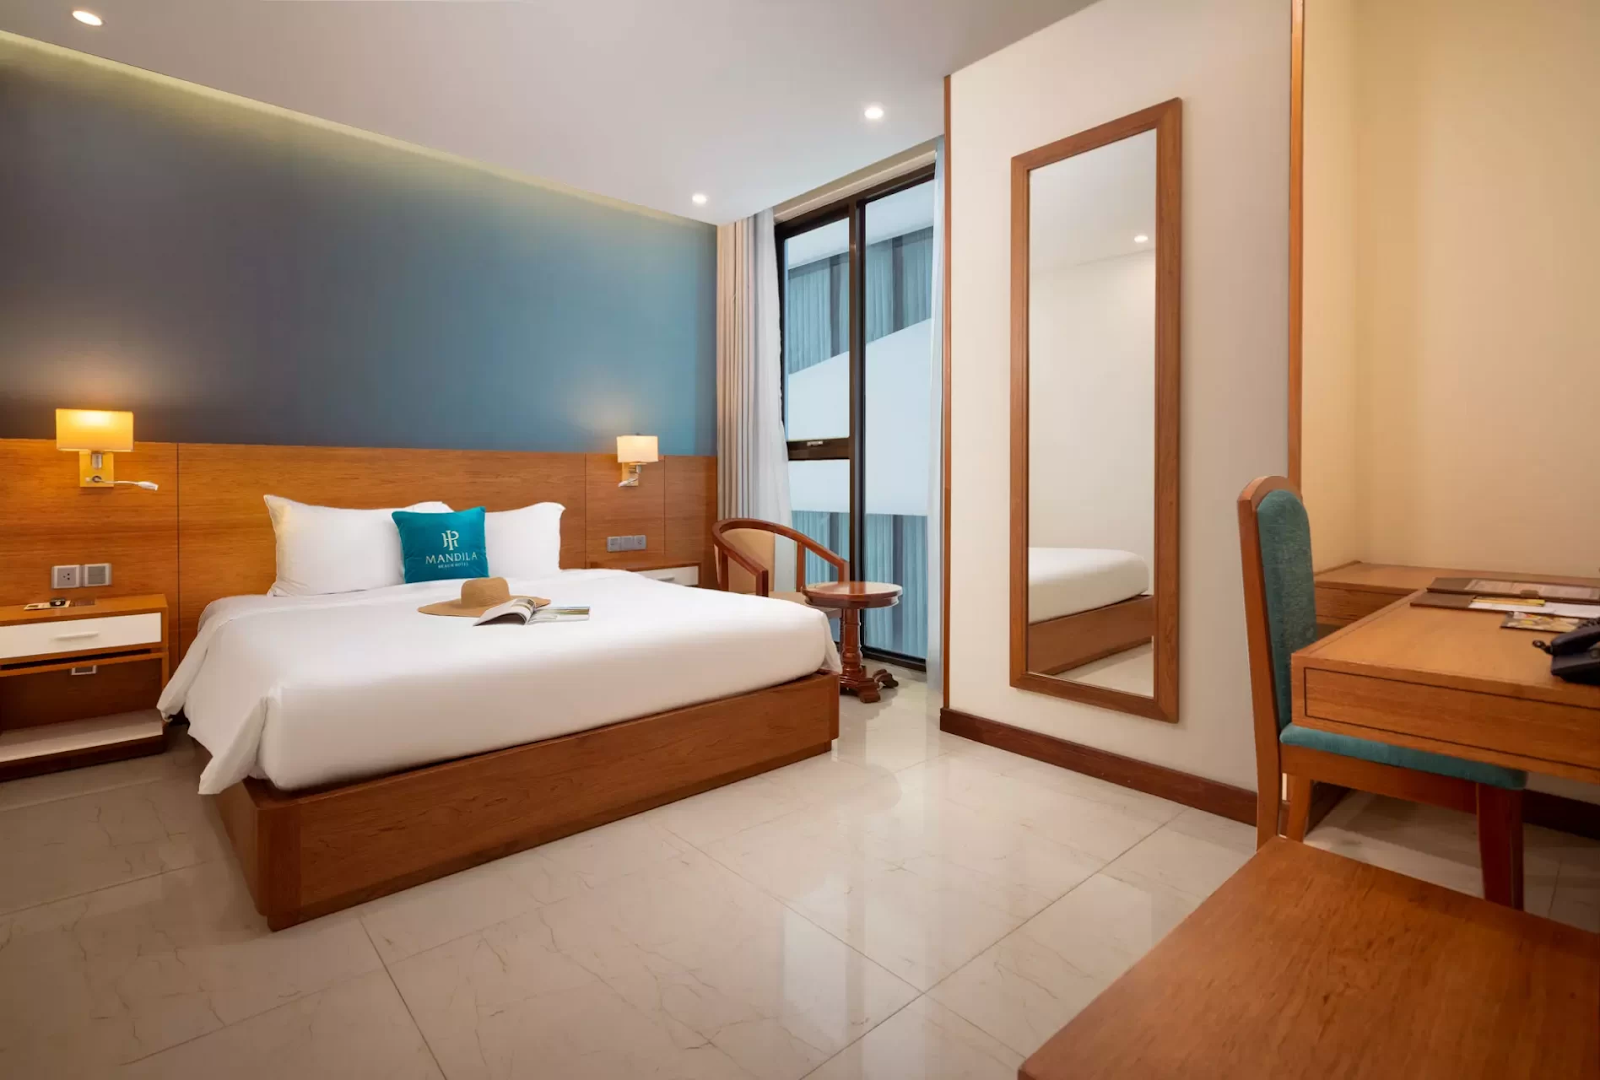 Da Nang in November - Where to Stay? - Mandila Beach Hotel Danang - An ideal stop for your trip